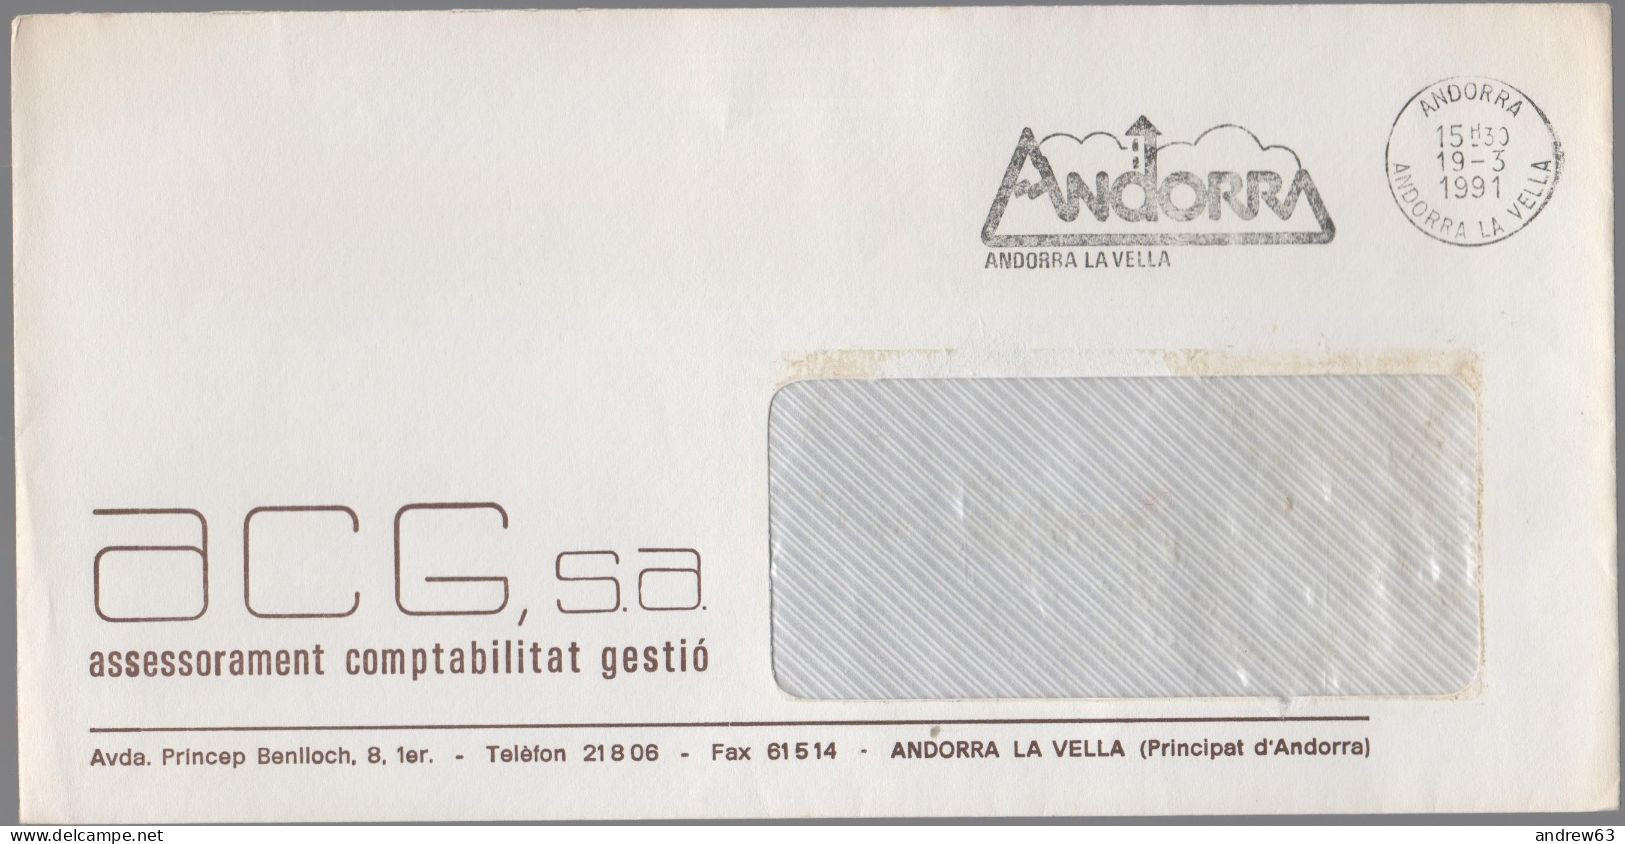 ANDORRA - ANDORRE - 1991 - Lettre En Franchise + Flamme - ACG, S.a. - Viaggiata Da Andorra La Vella - Lettres & Documents